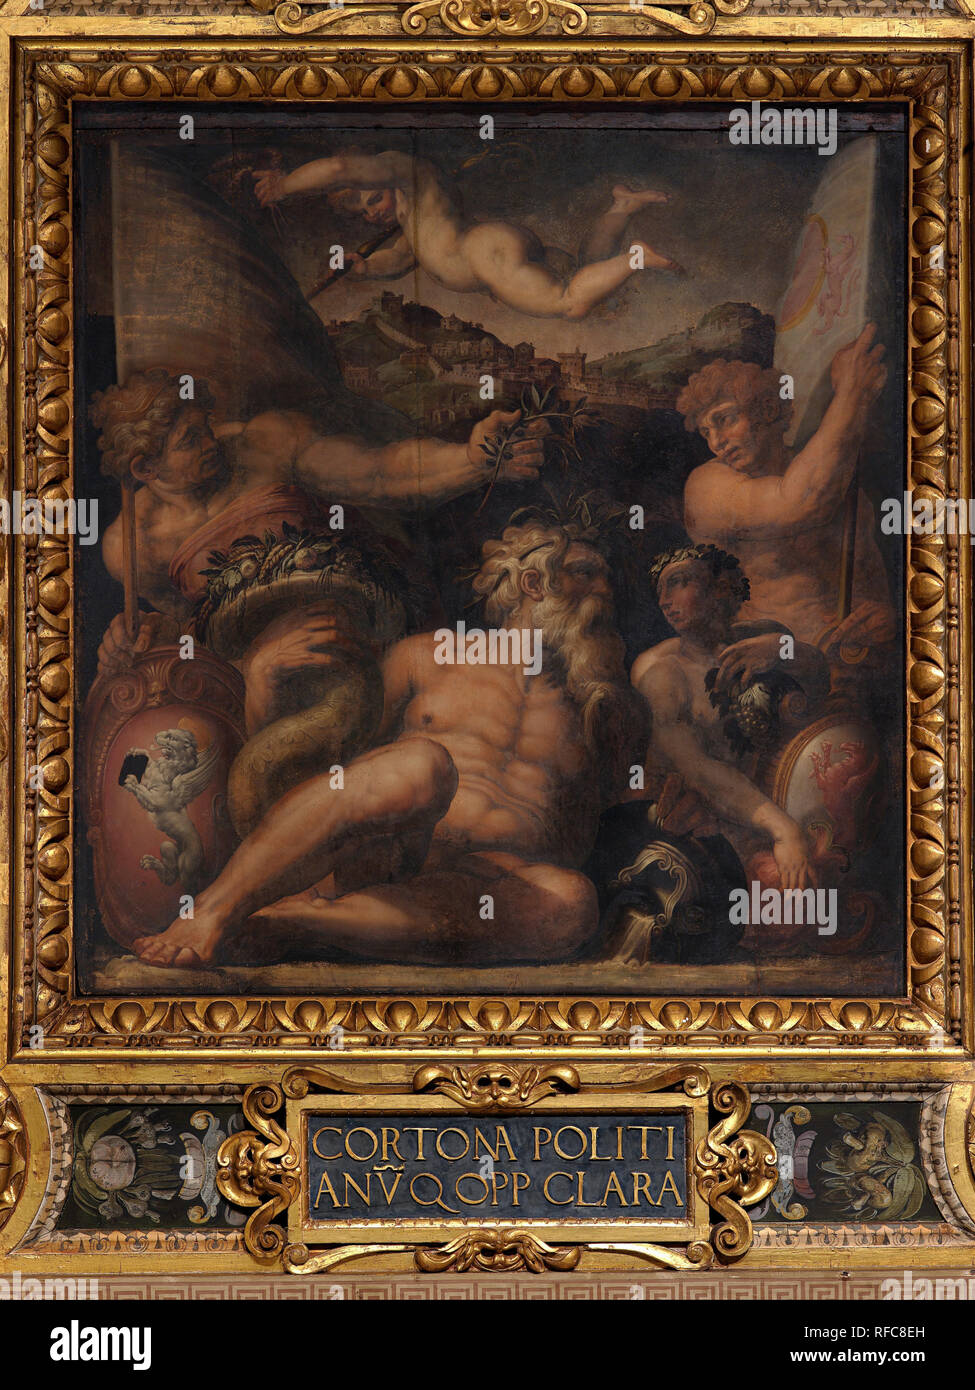 Allegory of Cortona and Montepulciano. Date/Period: 1563 - 1565. Oil painting on wood. Height: 250 mm (9.84 in); Width: 250 mm (9.84 in). Author: Giorgio Vasari. VASARI, GIORGIO. Stock Photo